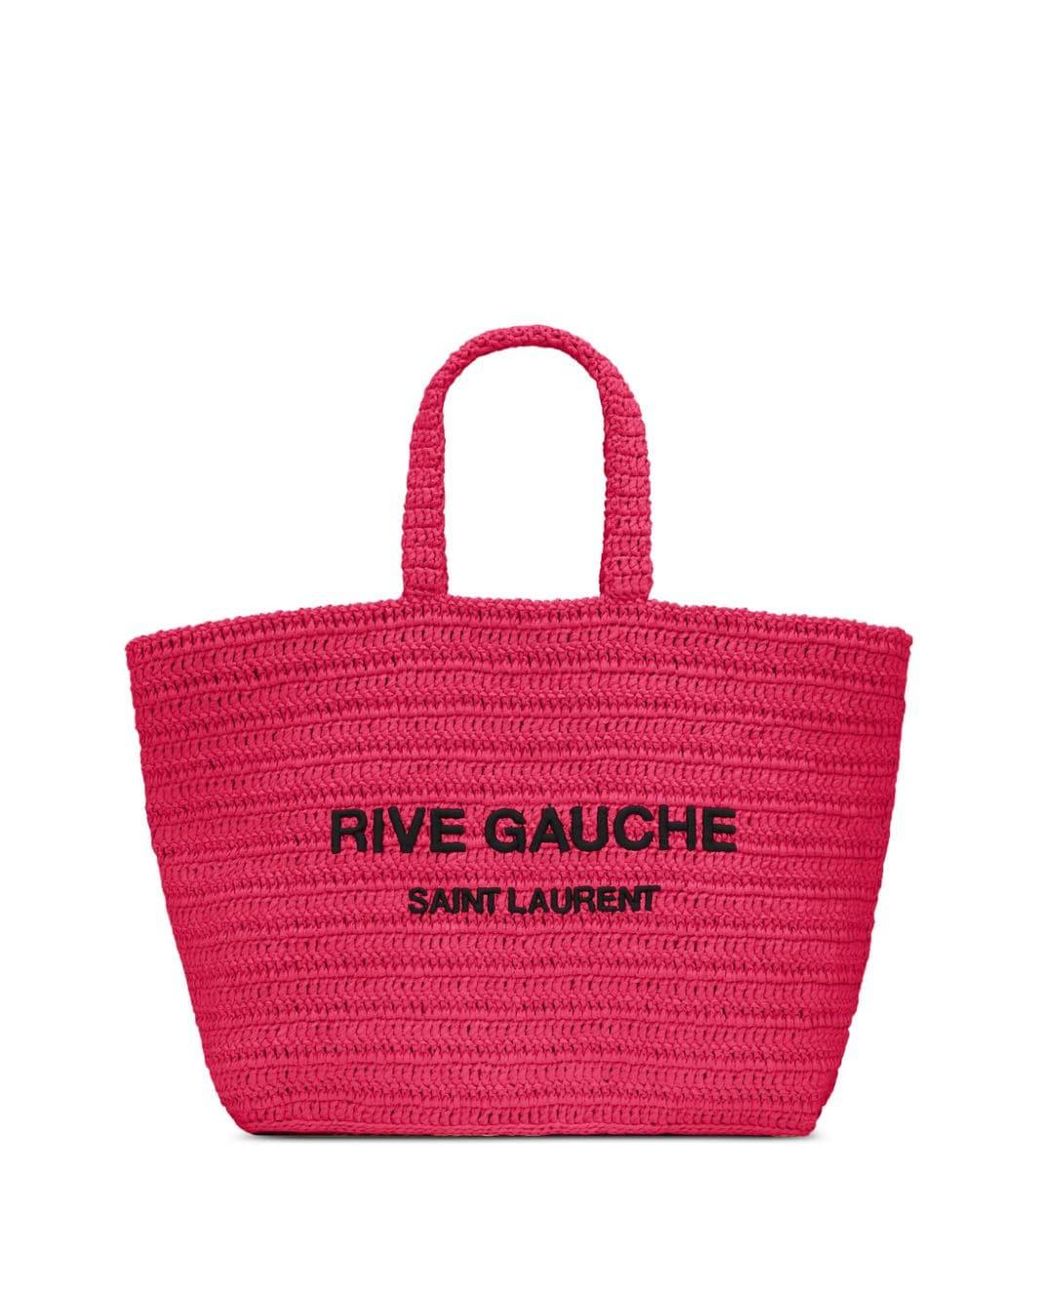 Saint Laurent Women's Tote Bags